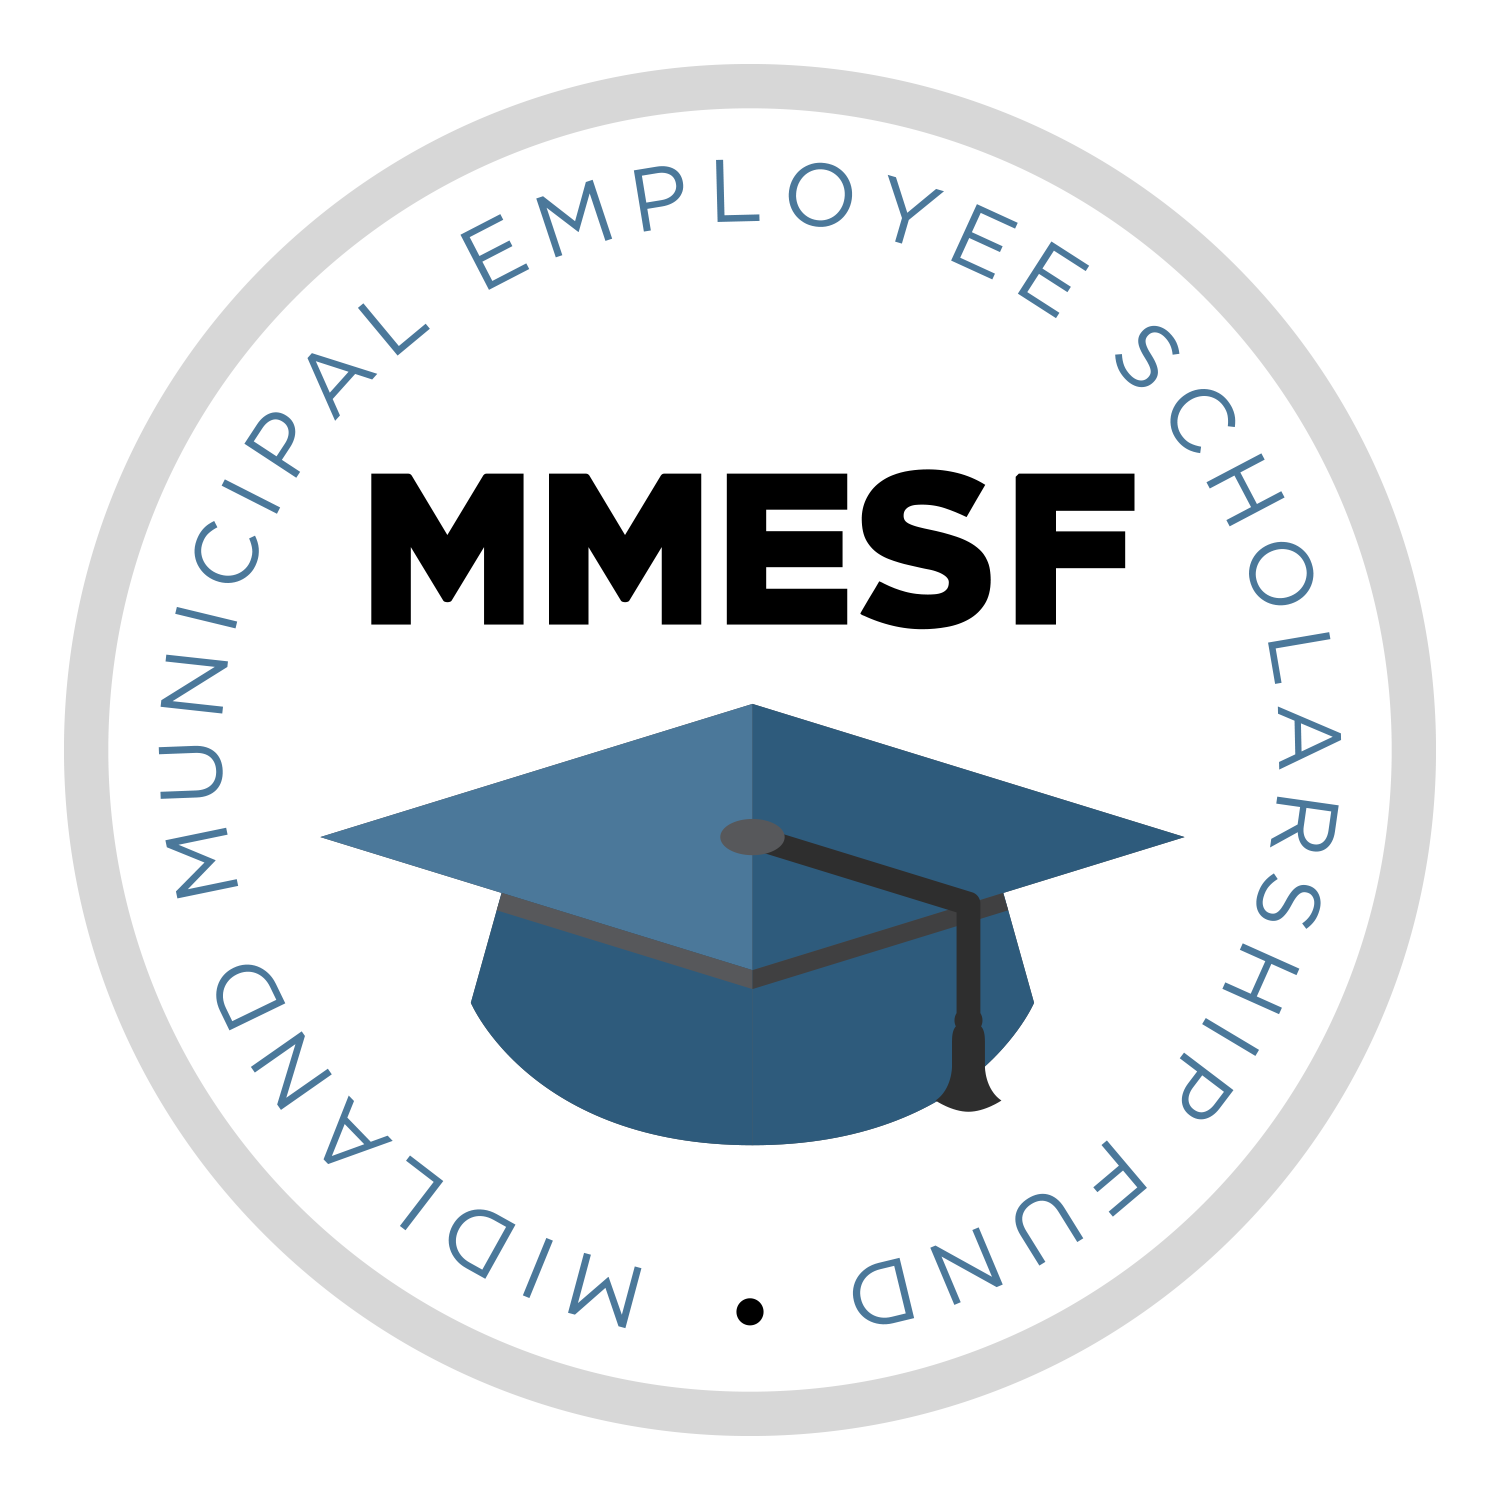 Midland Municipal Employee Scholarship Fund